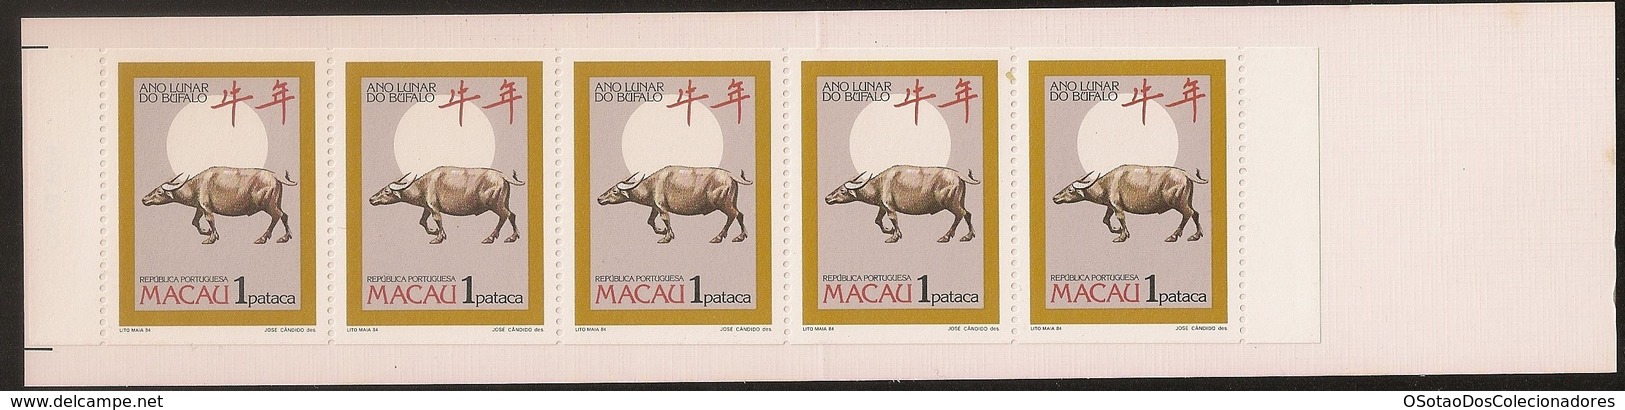 Macau Macao Chine Caderneta 1985 - Ano Lunar Do Bufalo - Chinese New Year - Year Of The Ox - MNH/Neuf - Booklets